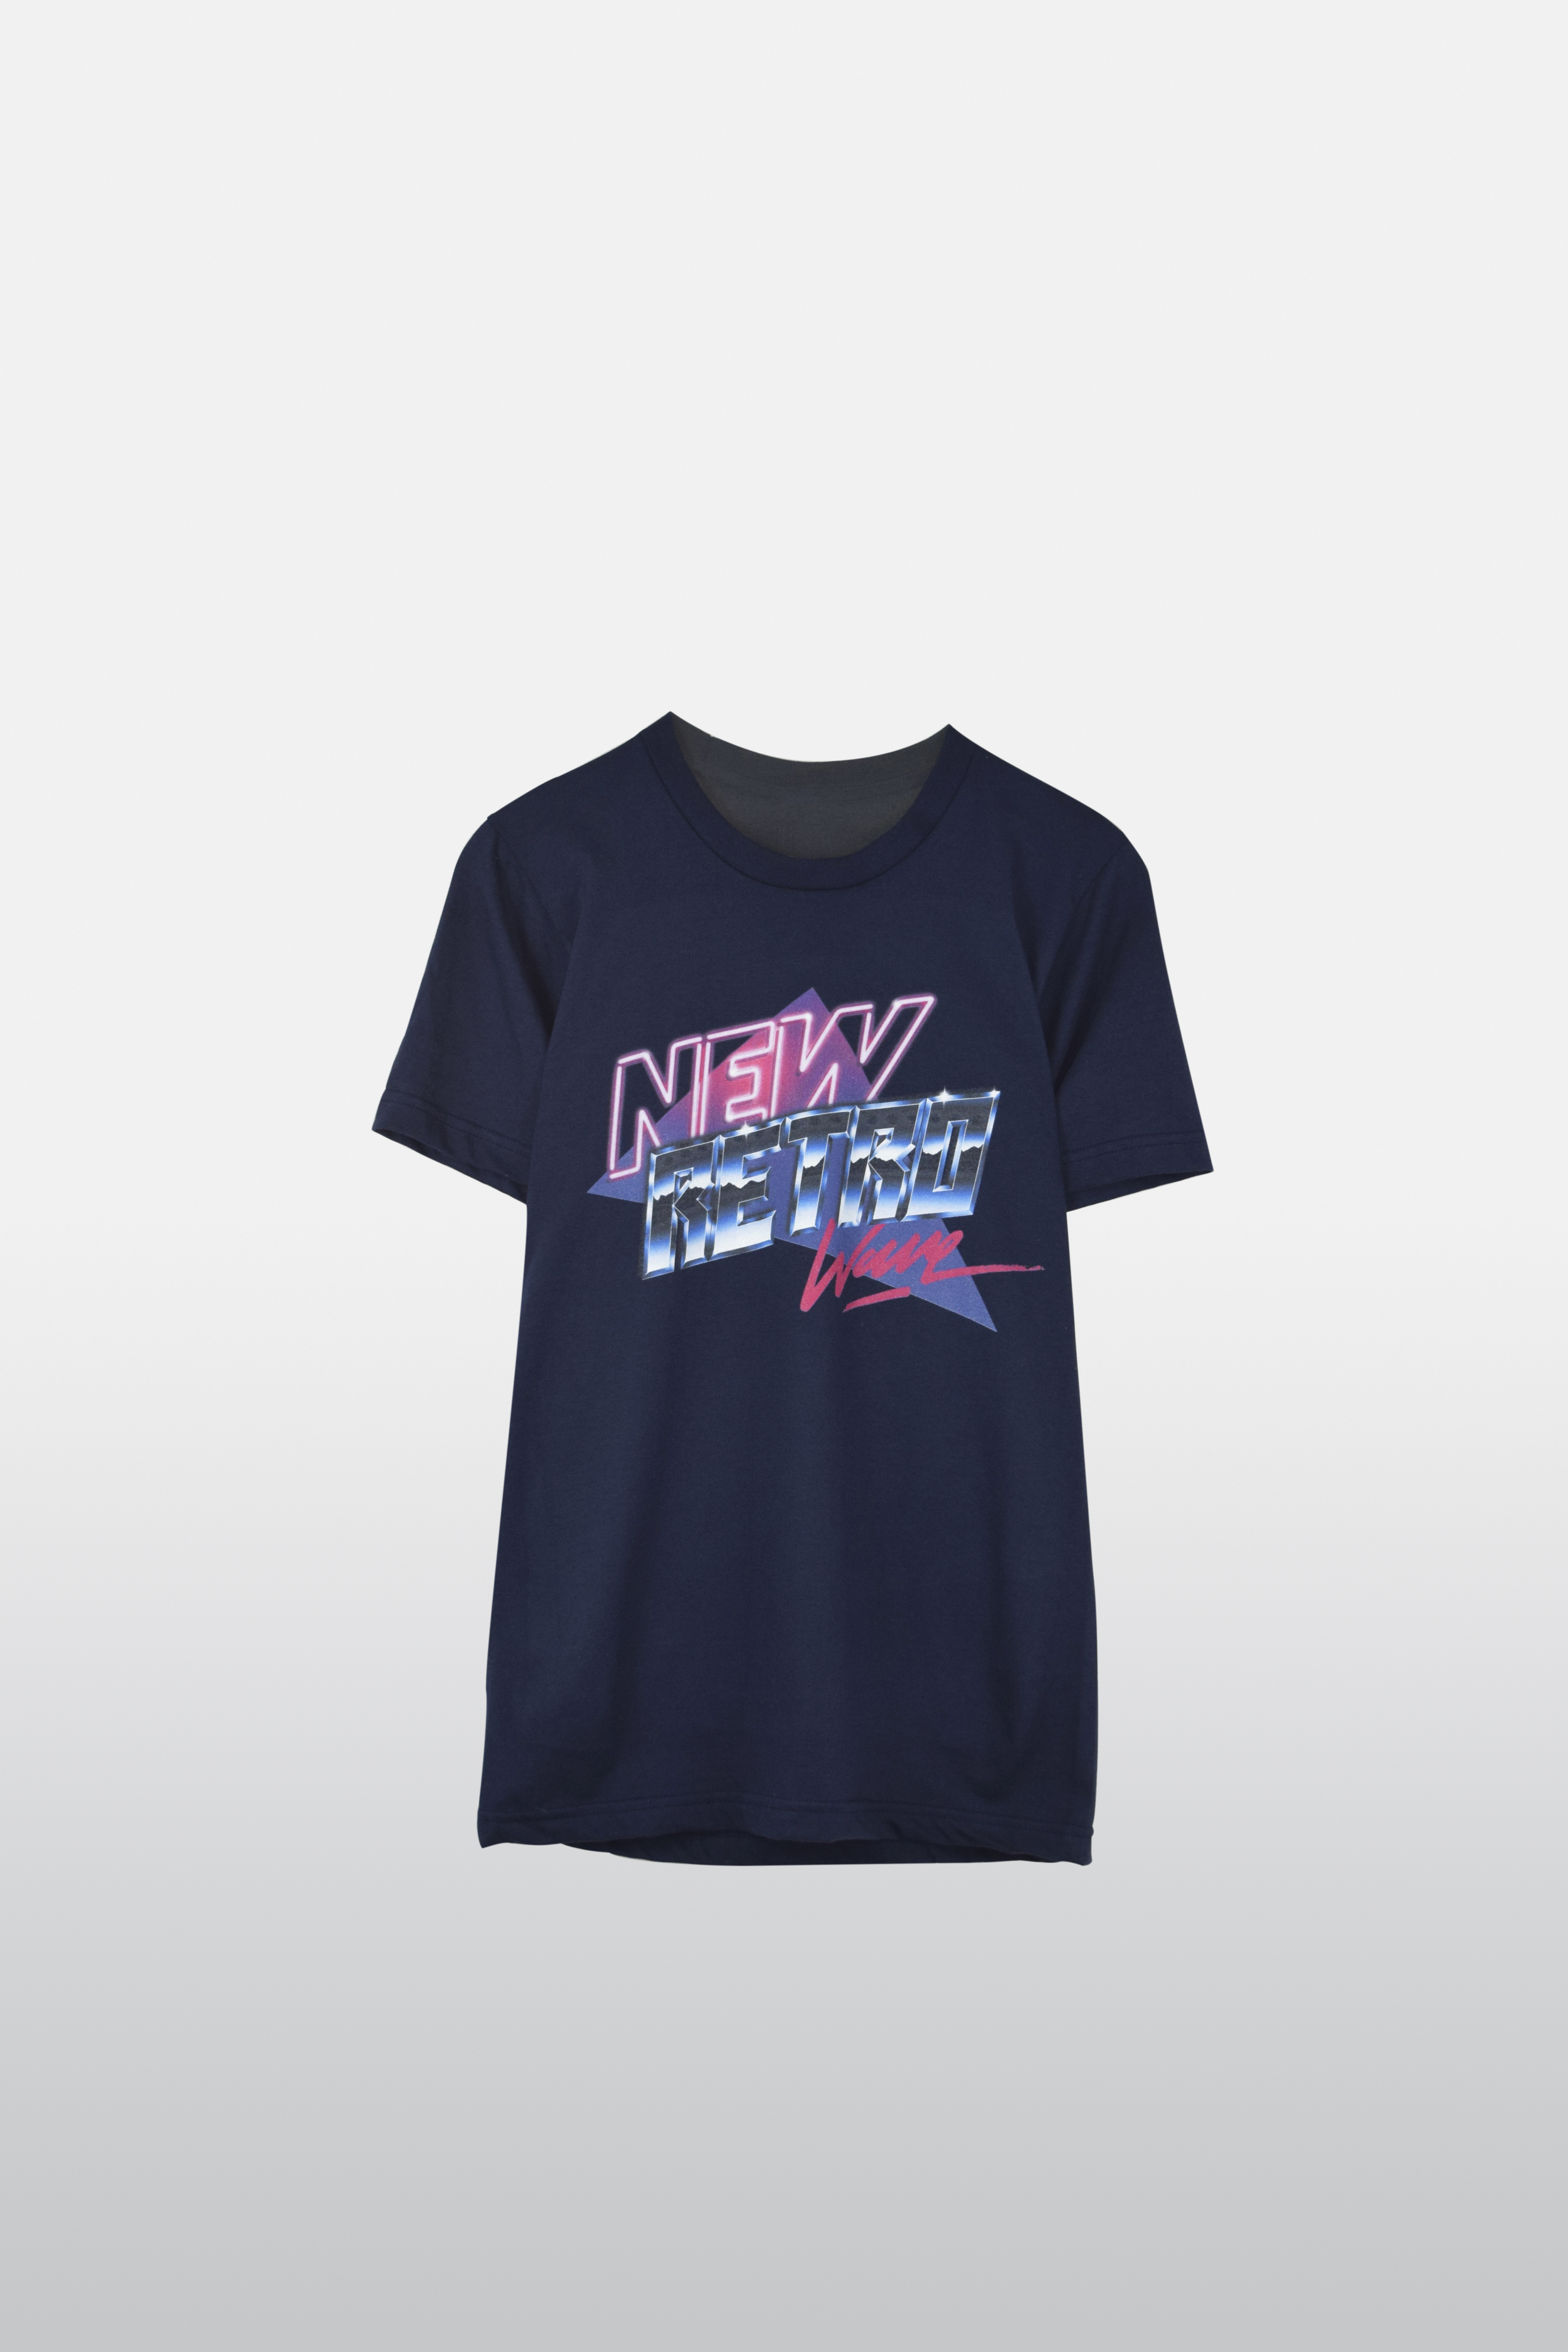 New+Retro+Wave+T Shirt?format=original - Akade Wear